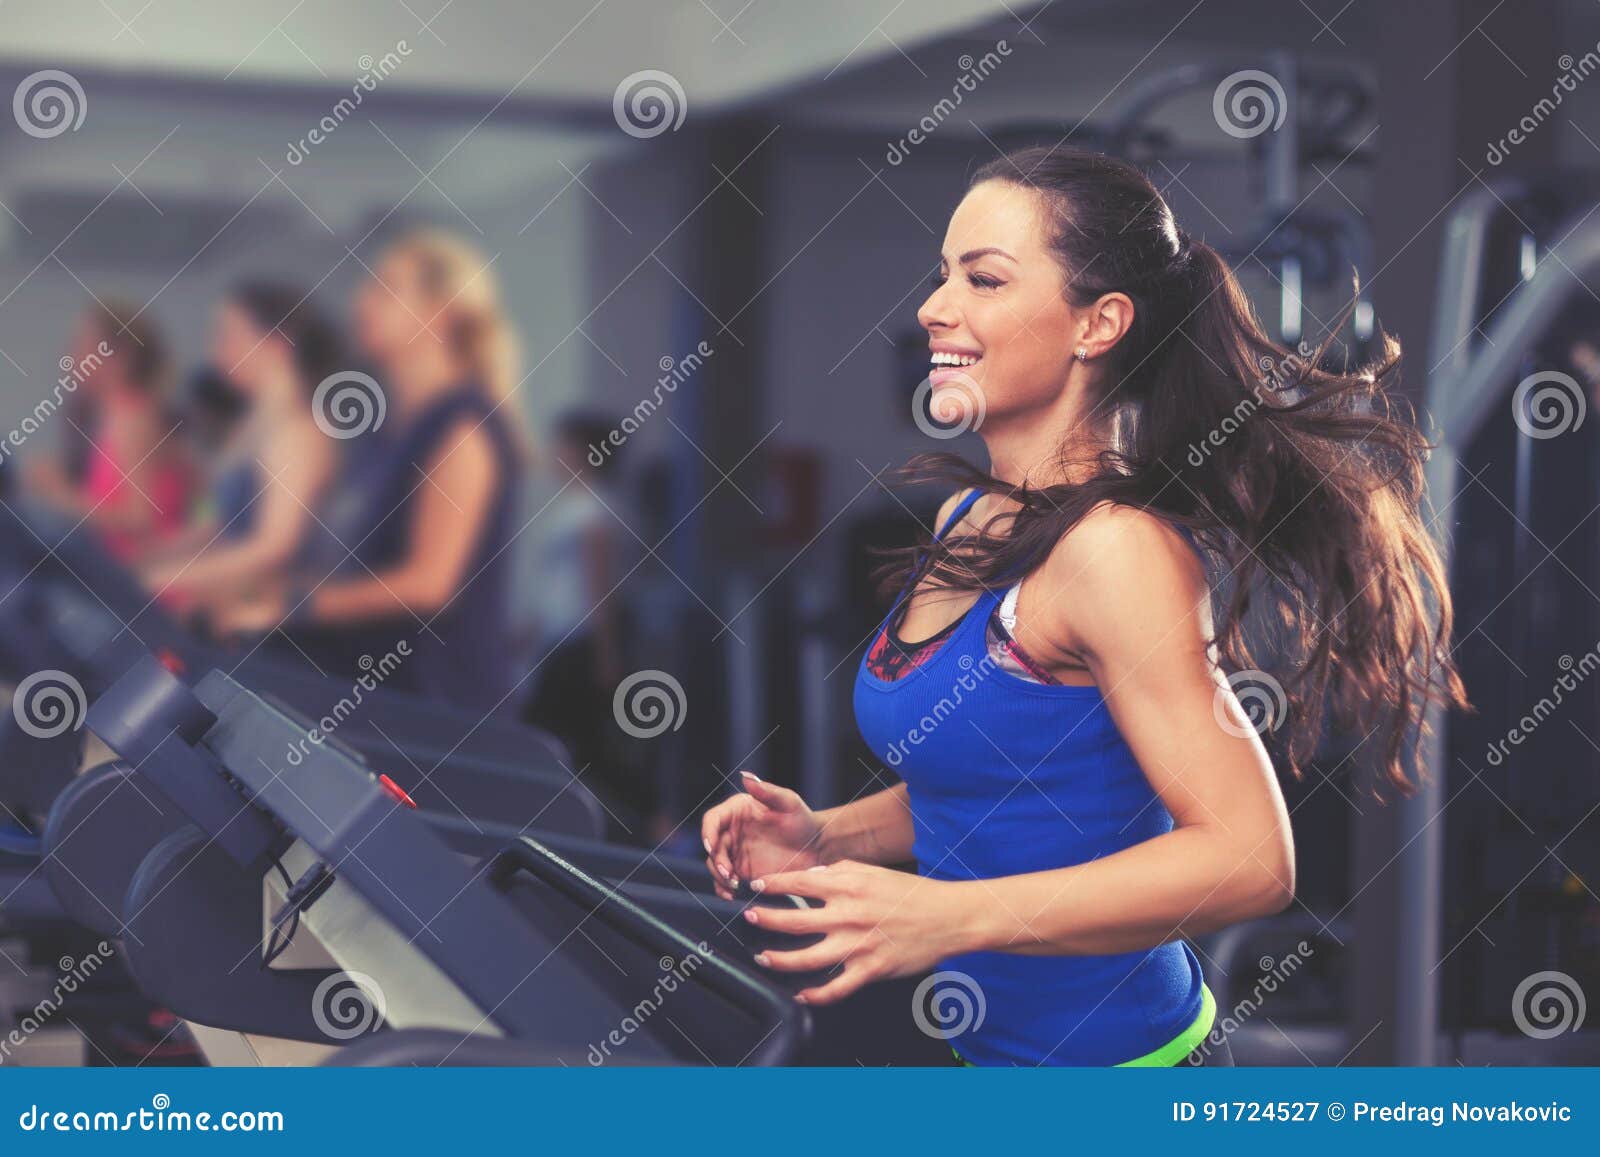 Beautiful Brunette on a Treadmill Stock Image - Image of ethnicity ...